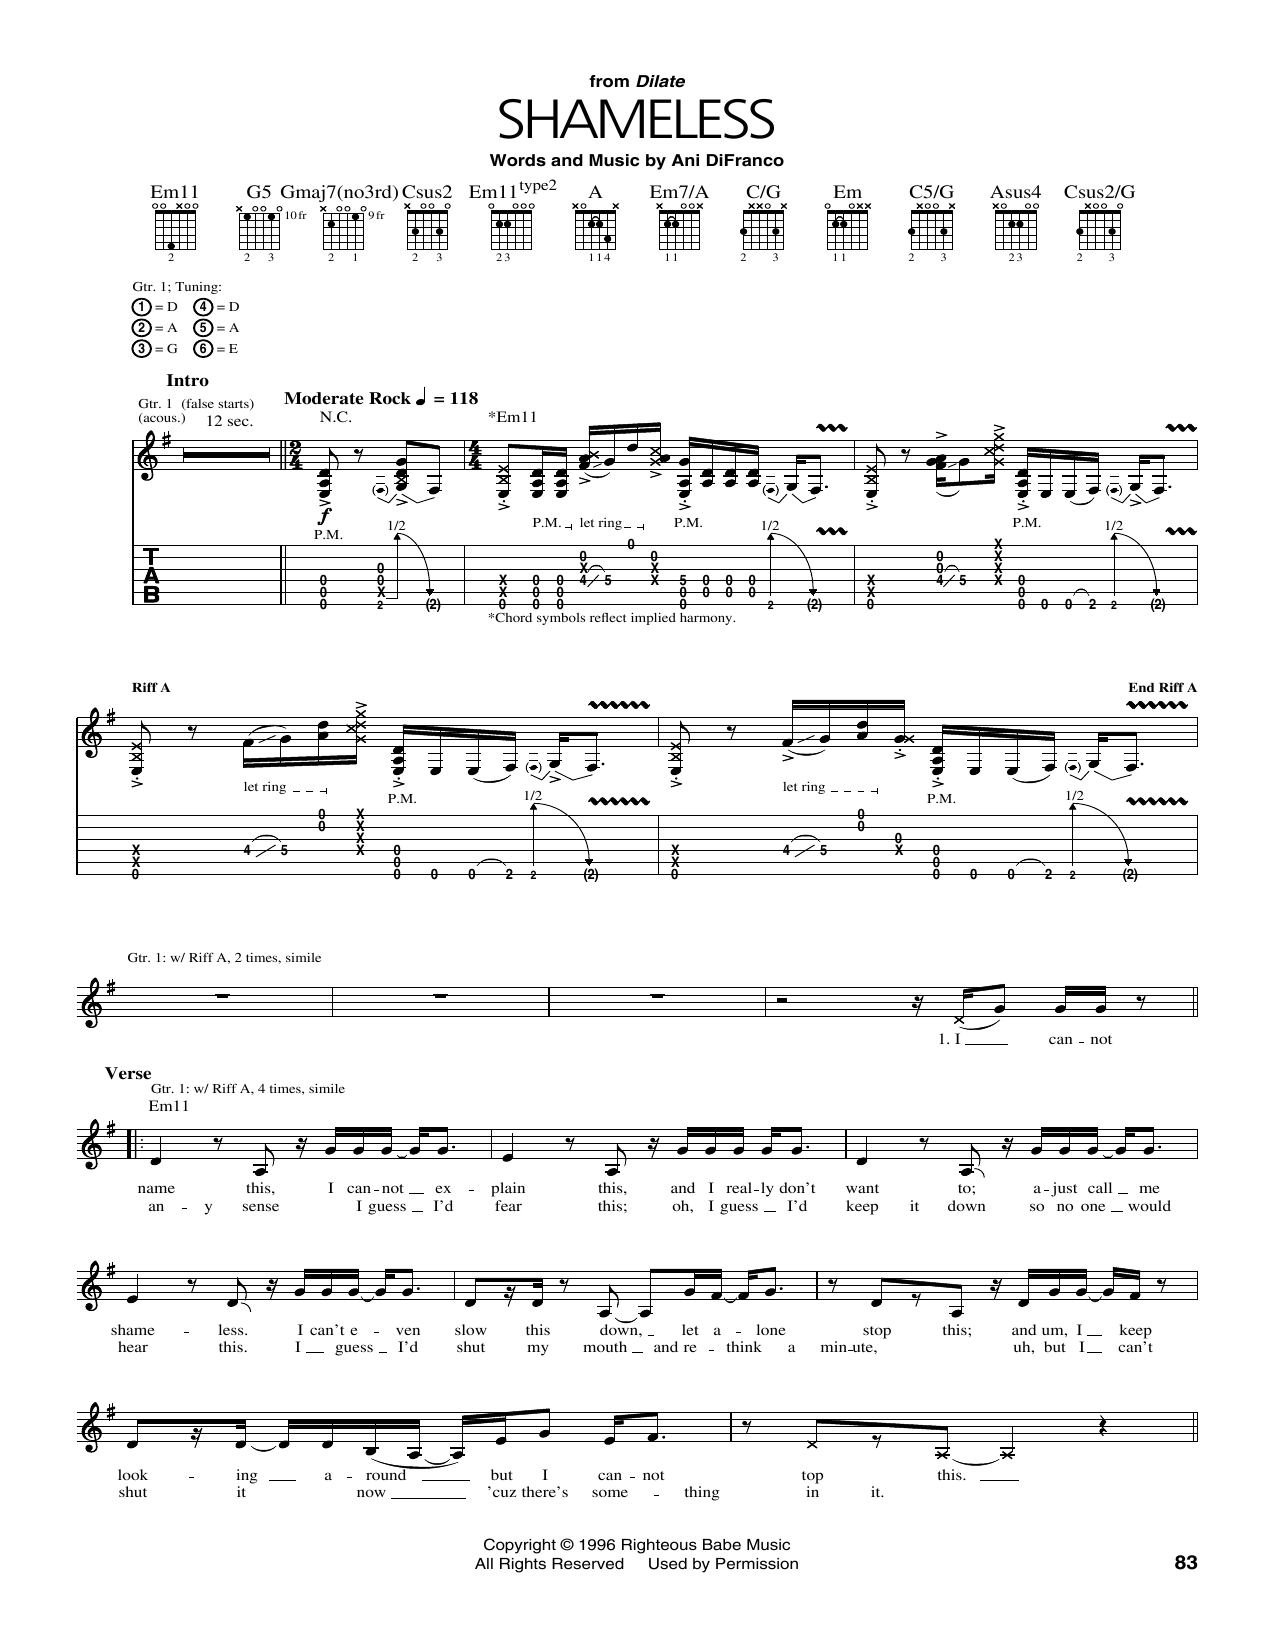 Ani DiFranco Shameless Sheet Music Notes & Chords for Guitar Tab - Download or Print PDF